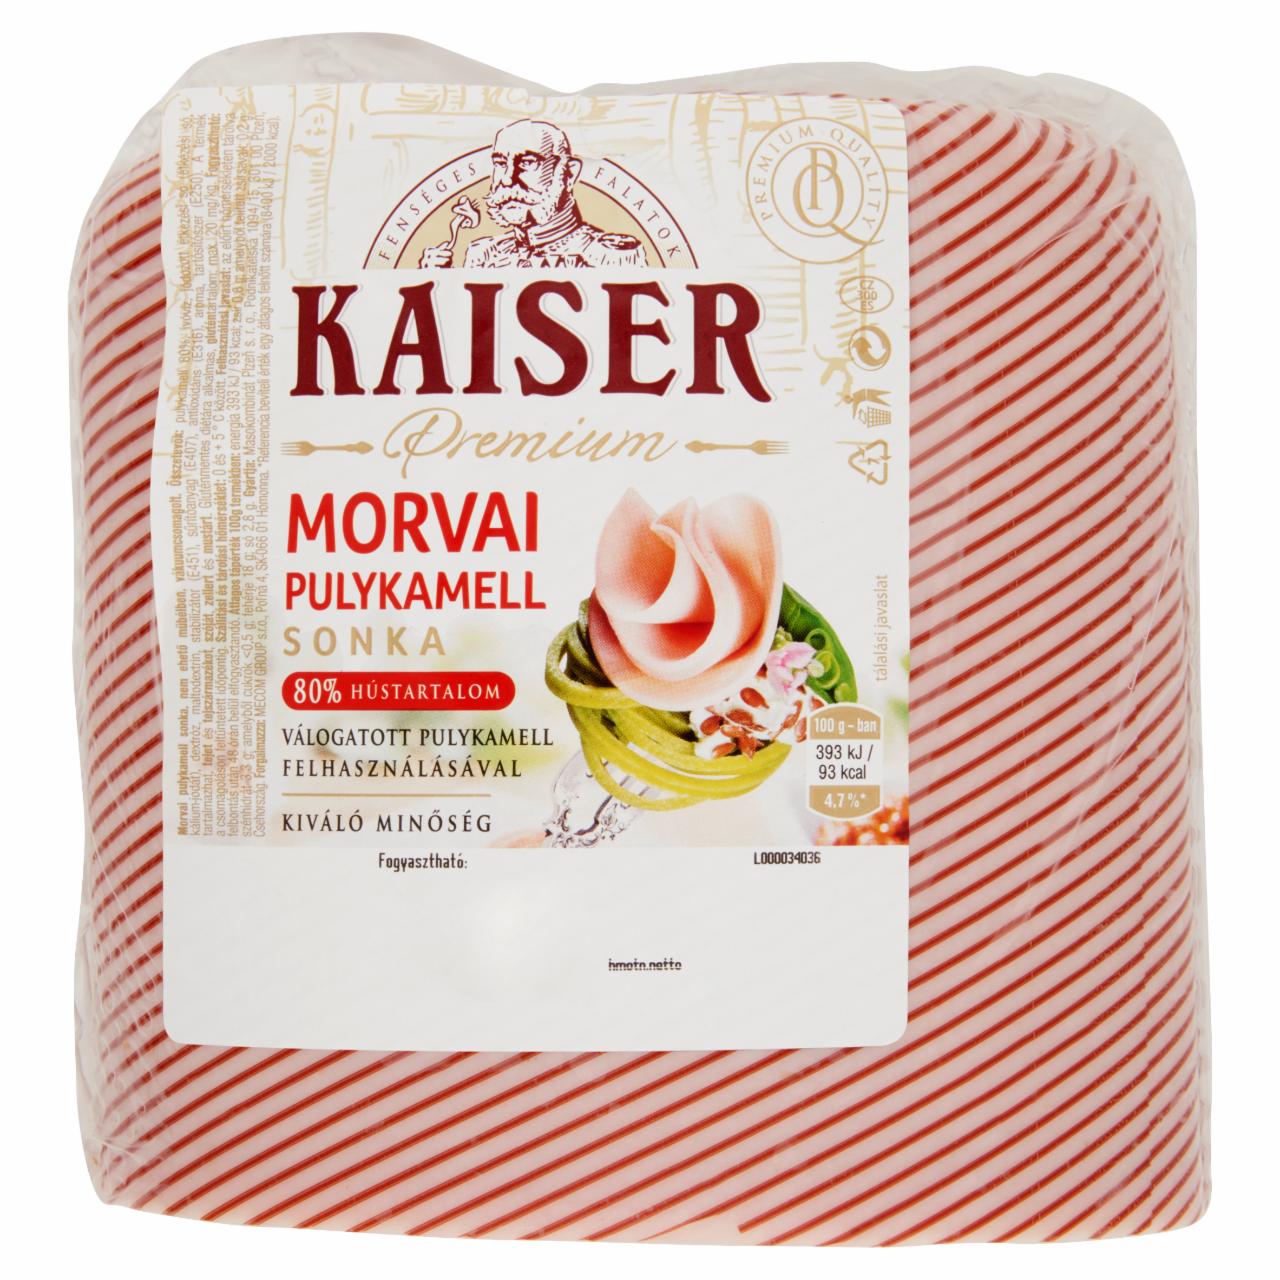 Képek - Kaiser Premium Morvai pulykamell sonka